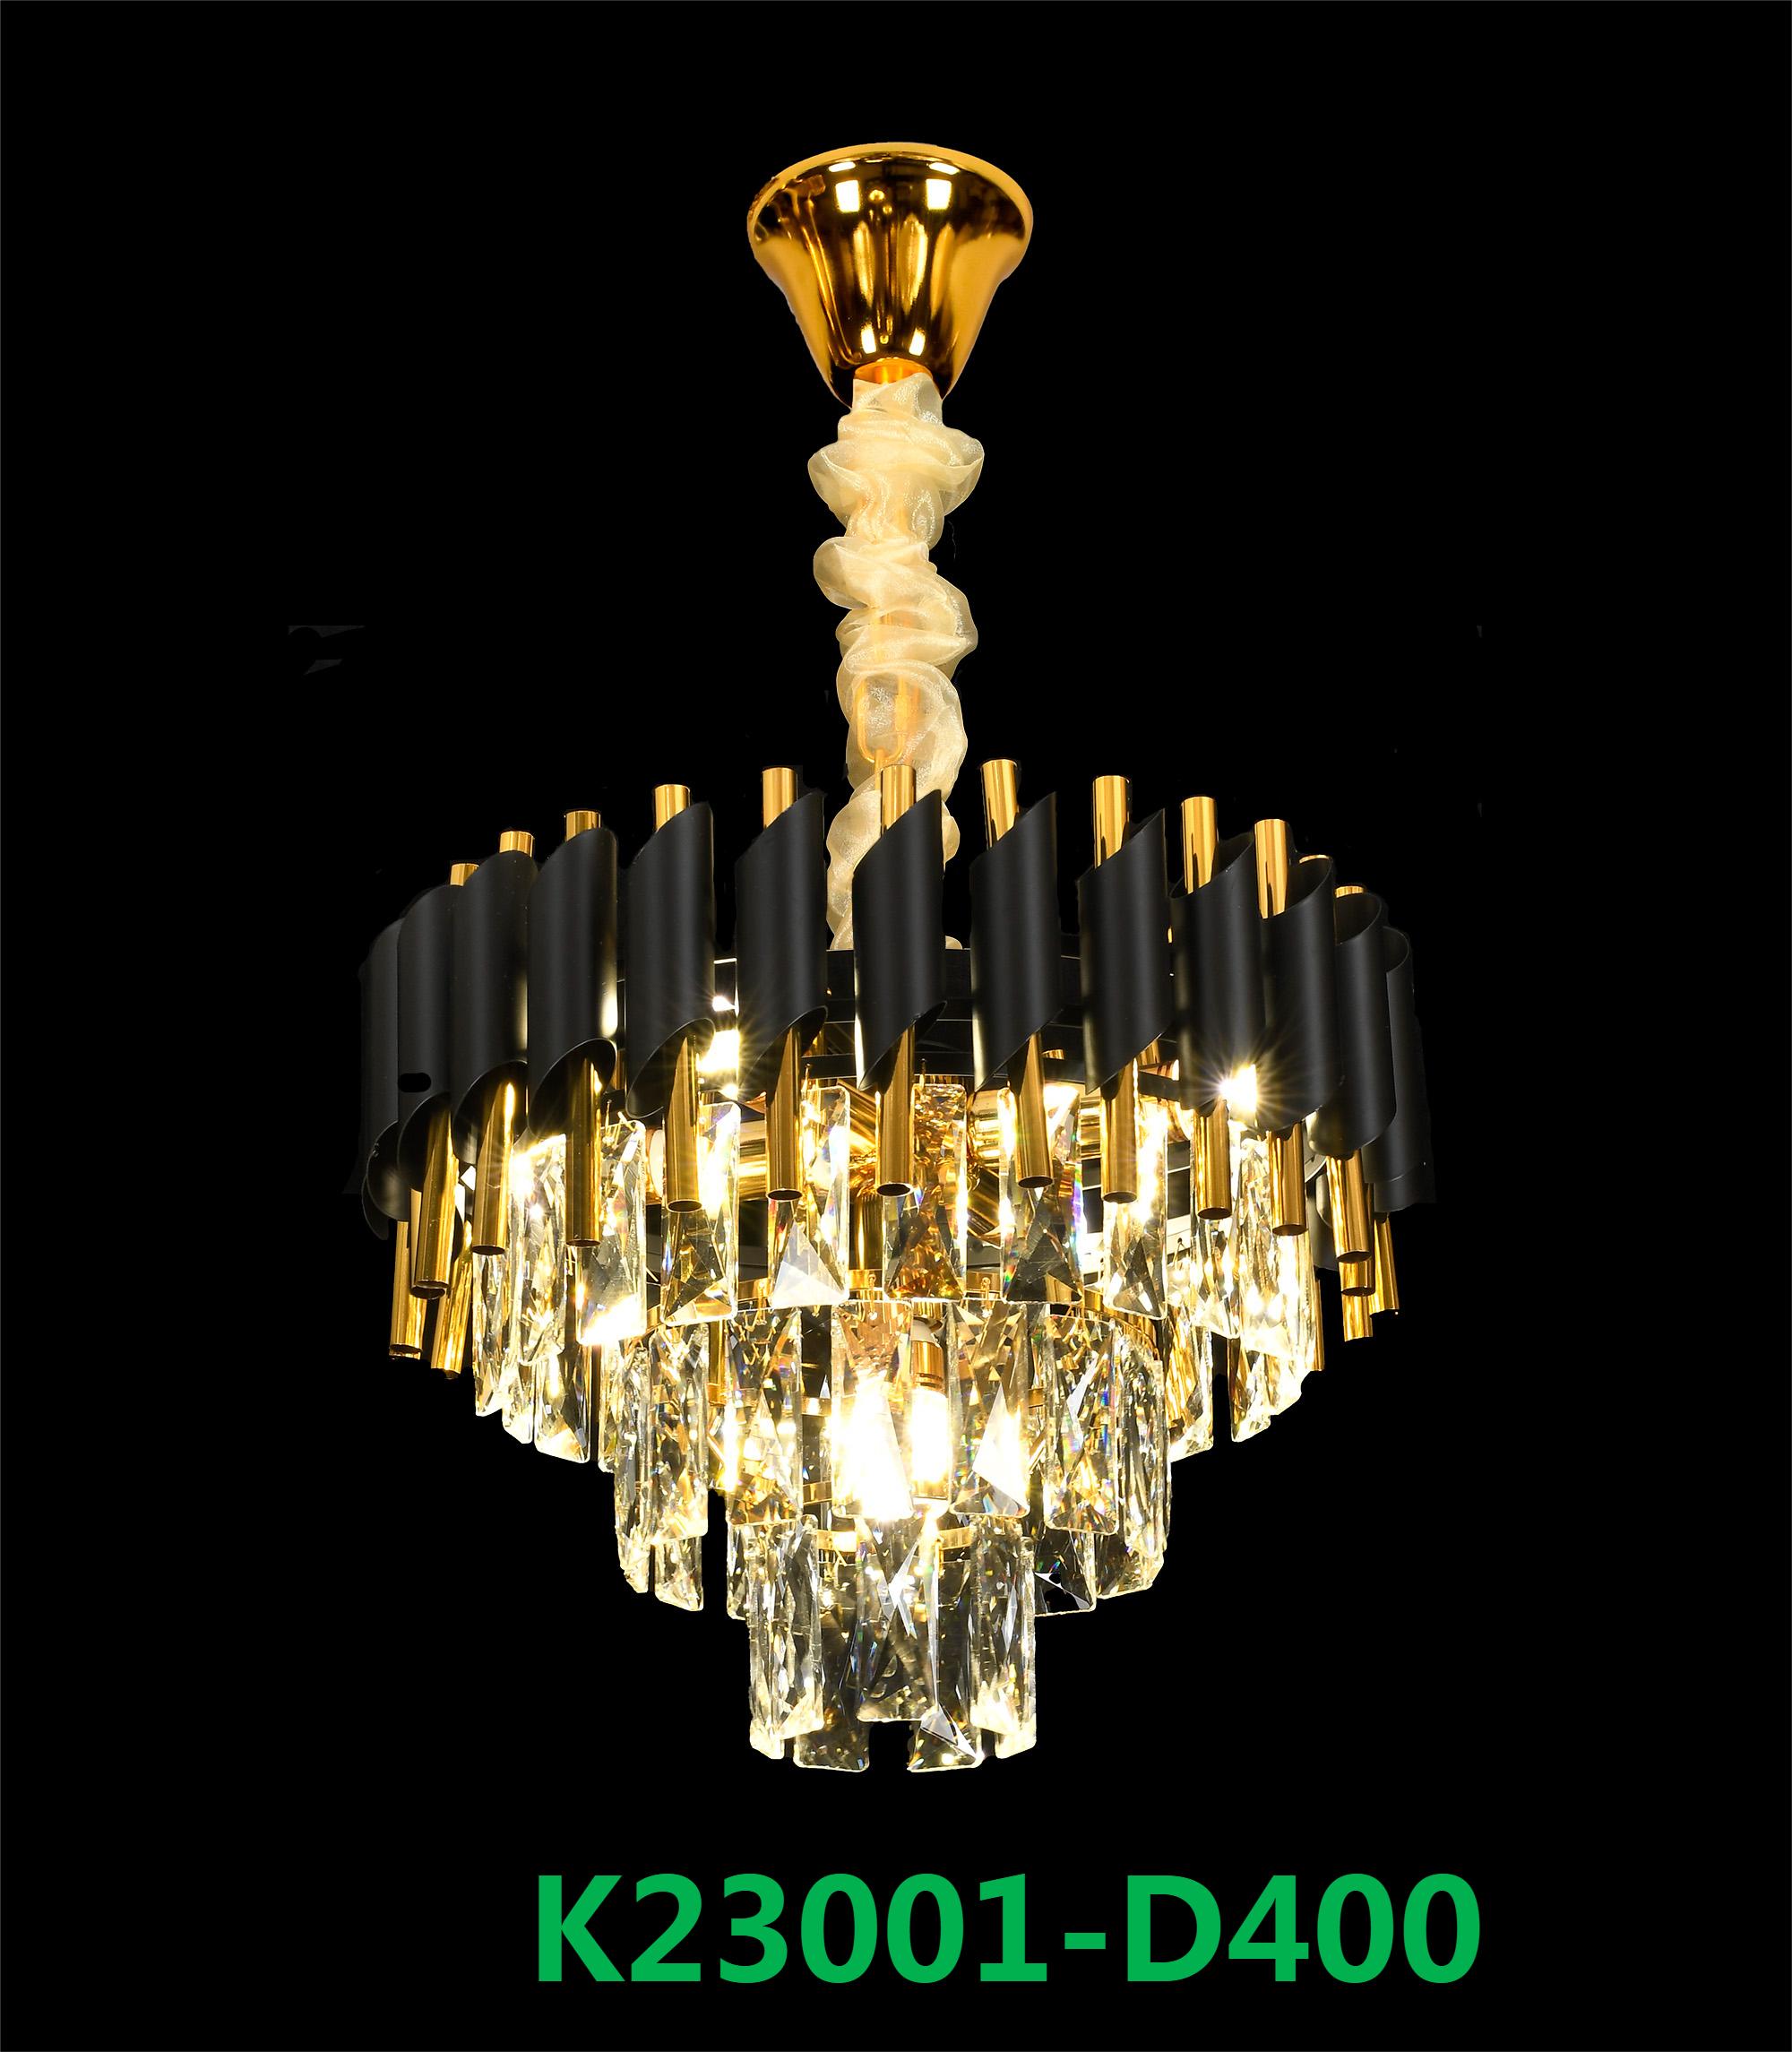 K23001-D400